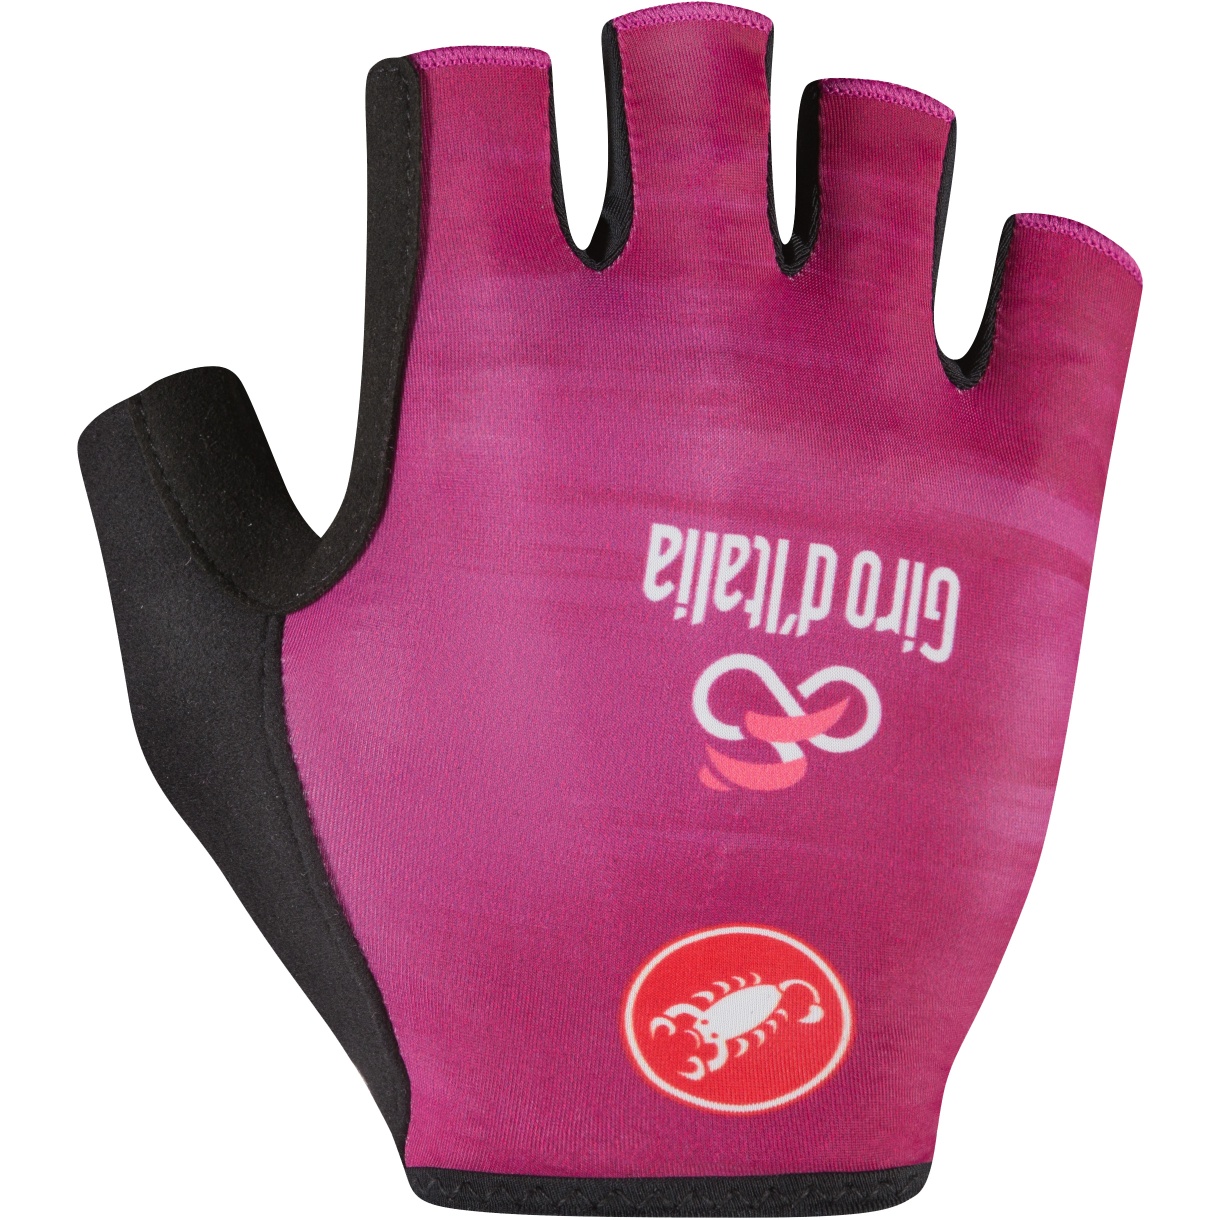 Produktbild von Castelli Giro d&#039;Italia #Giro Kurzfinger-Handschuhe - ciclamino 014